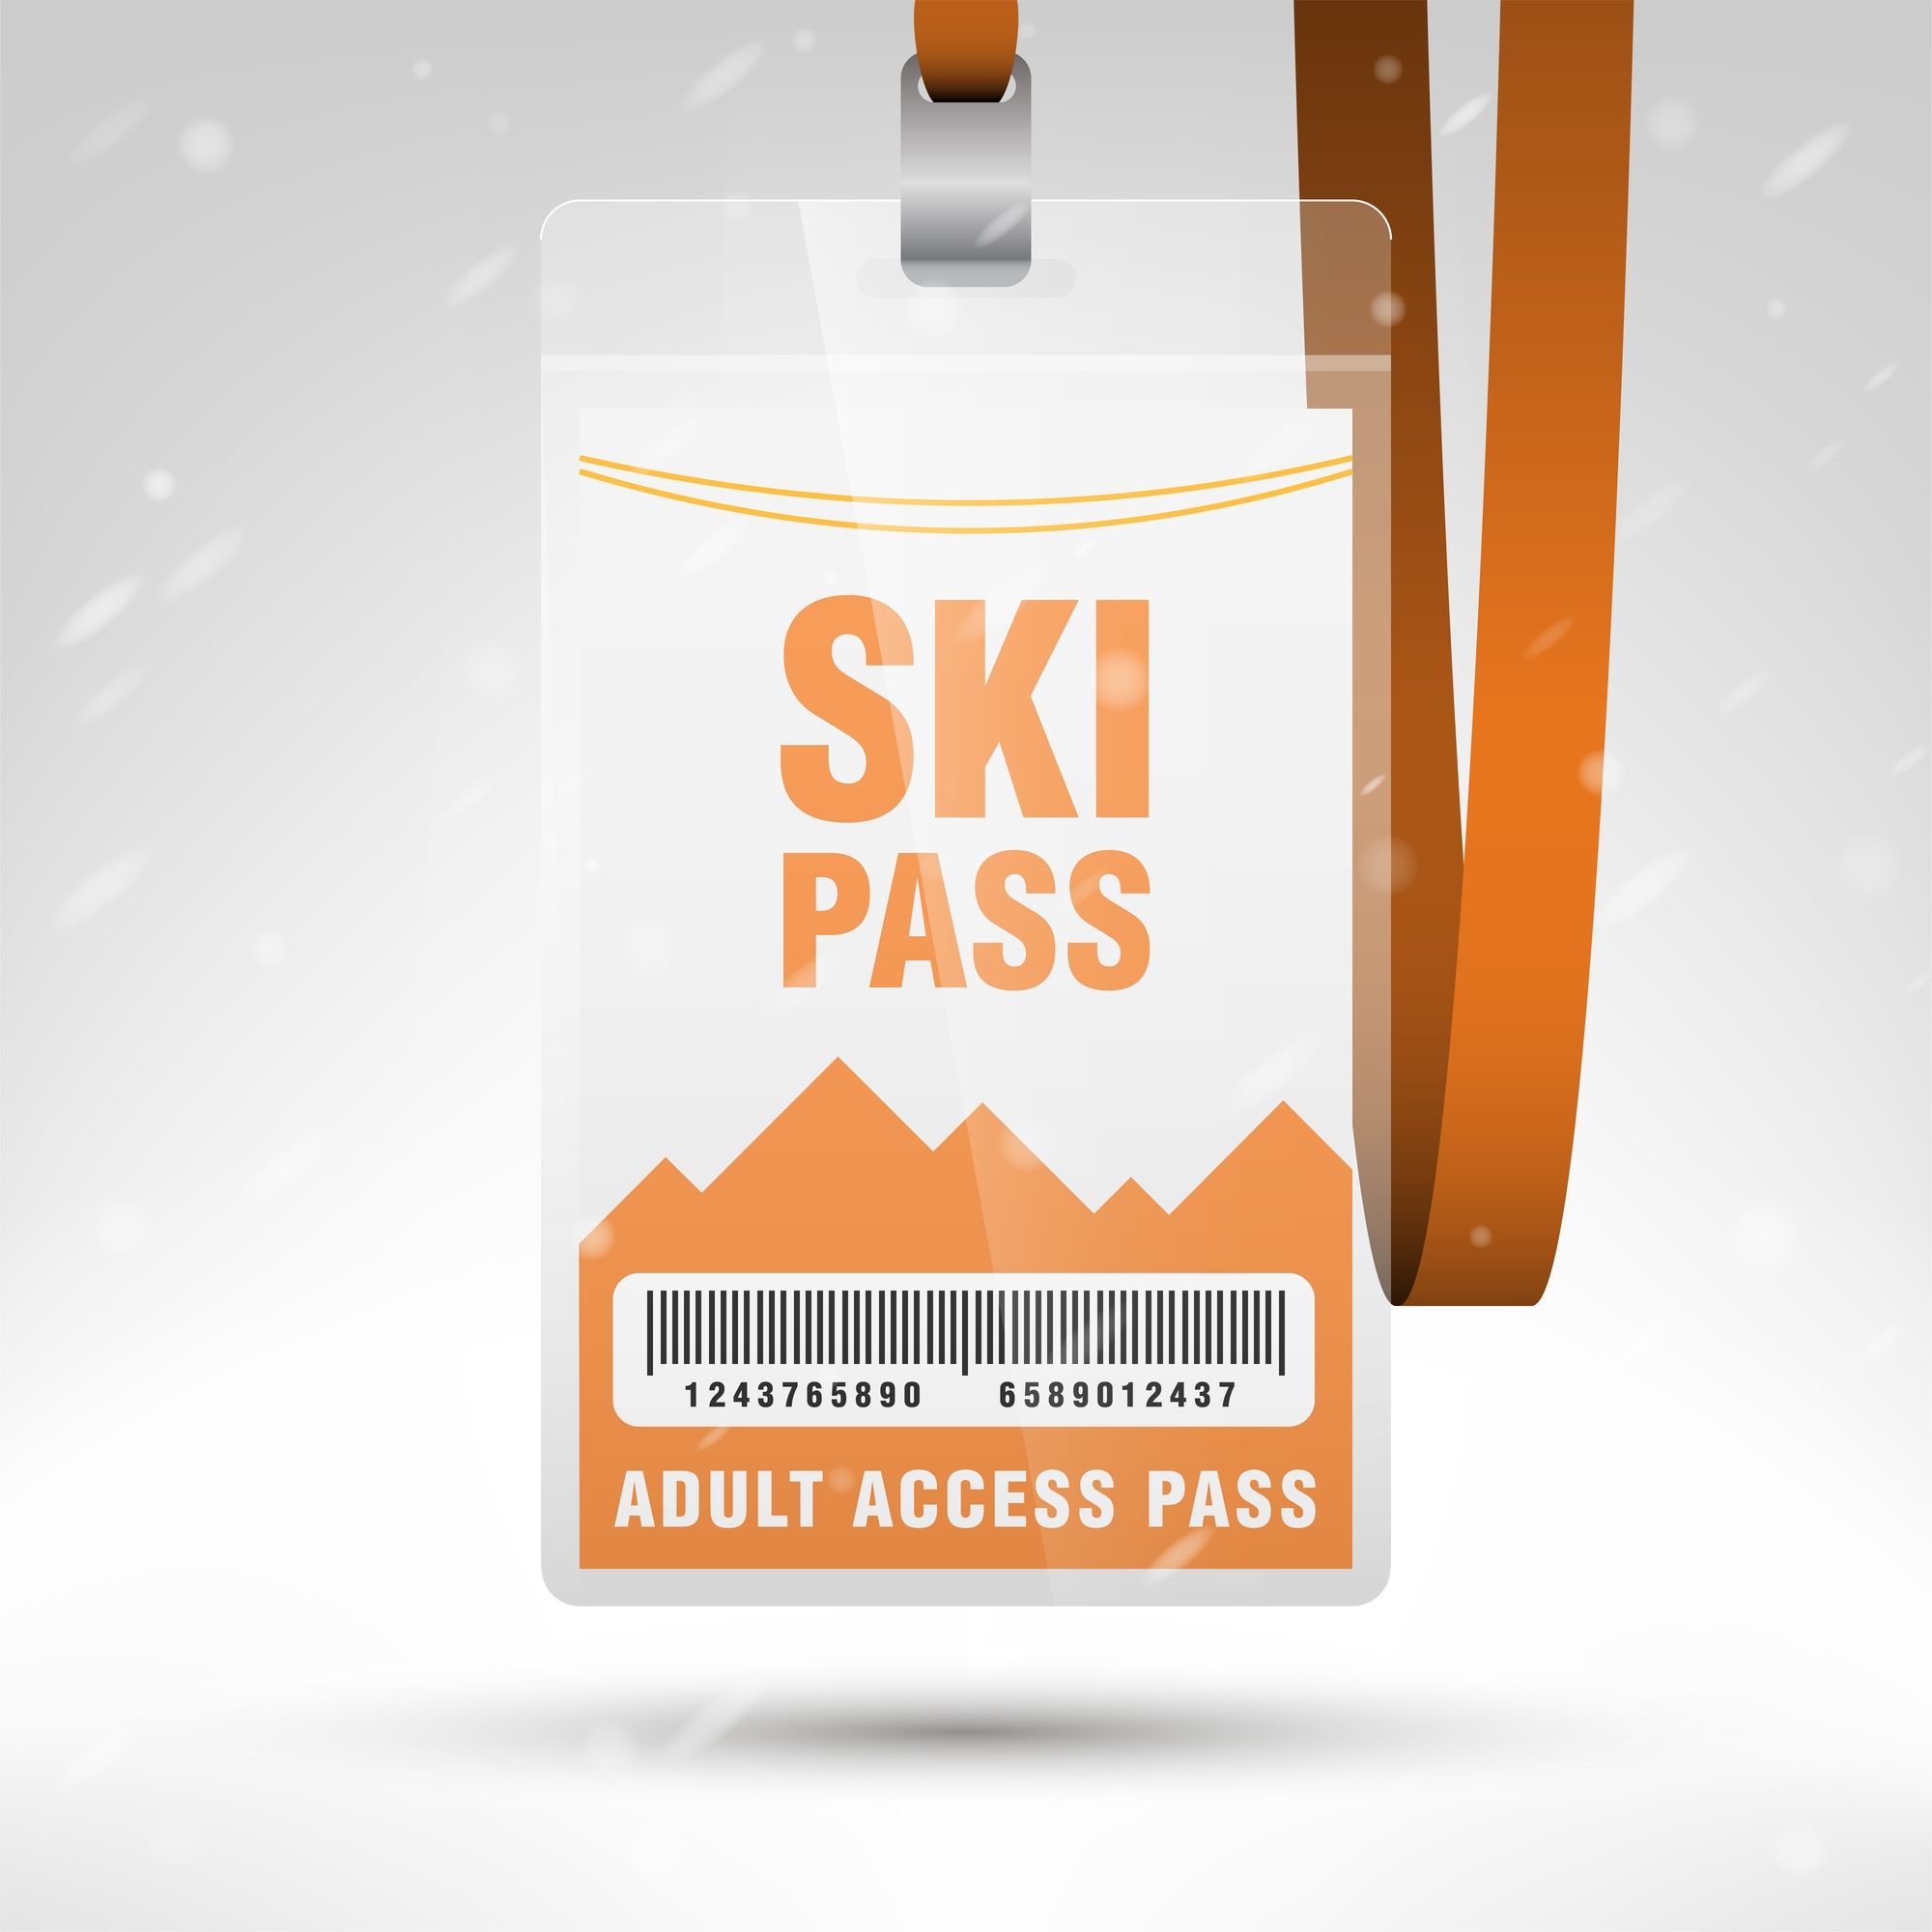 Ski pass regarding the Alterra Mountain Company ski pass class action lawsuit filed 